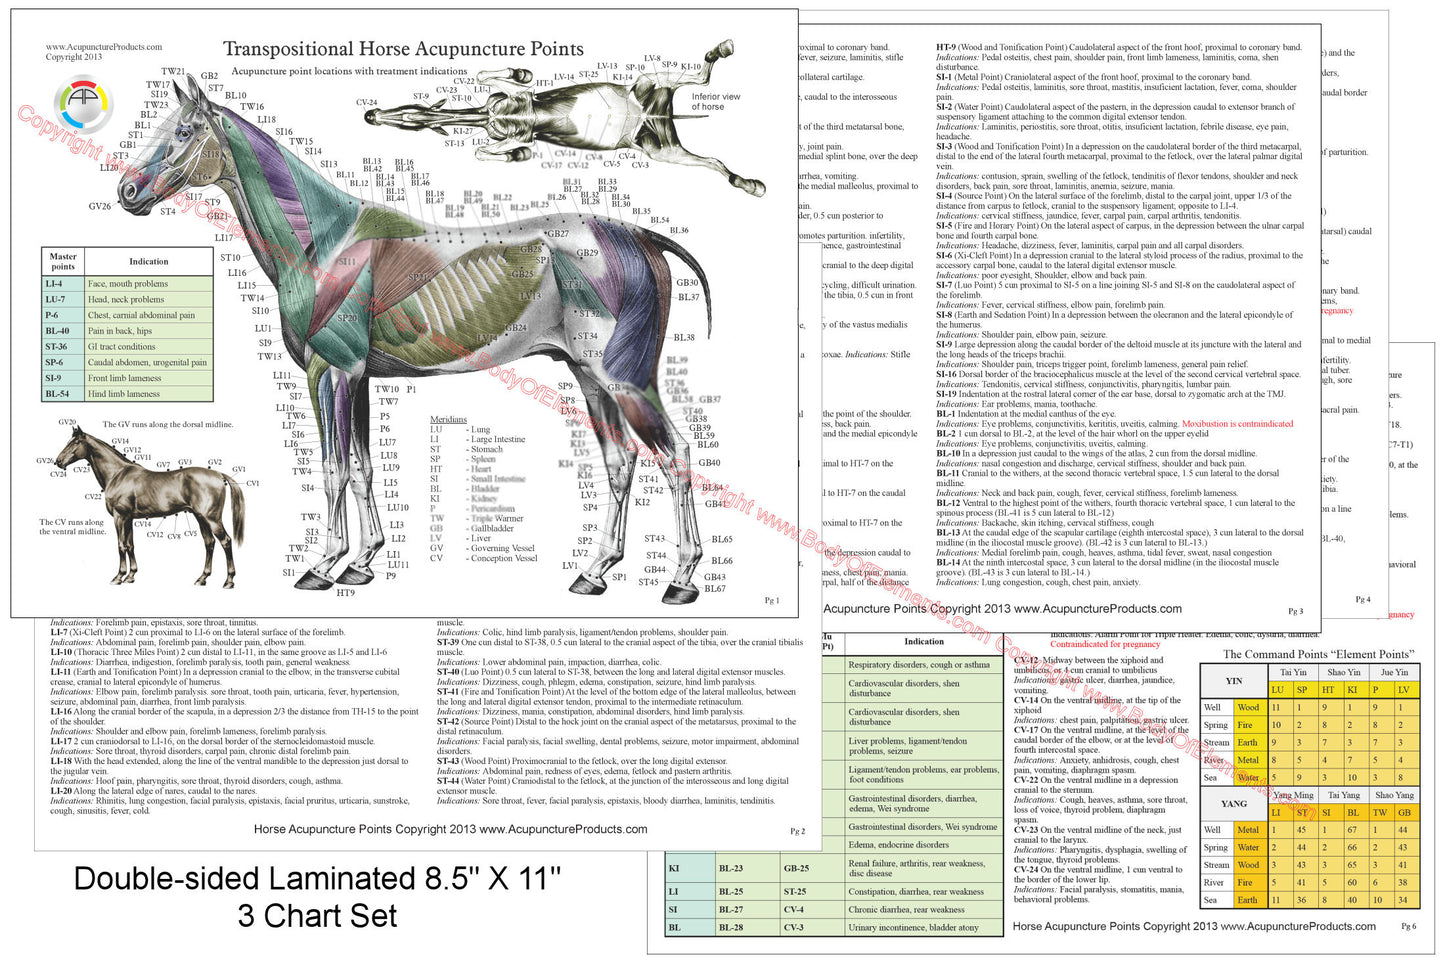 Horse acupuncture points chart set